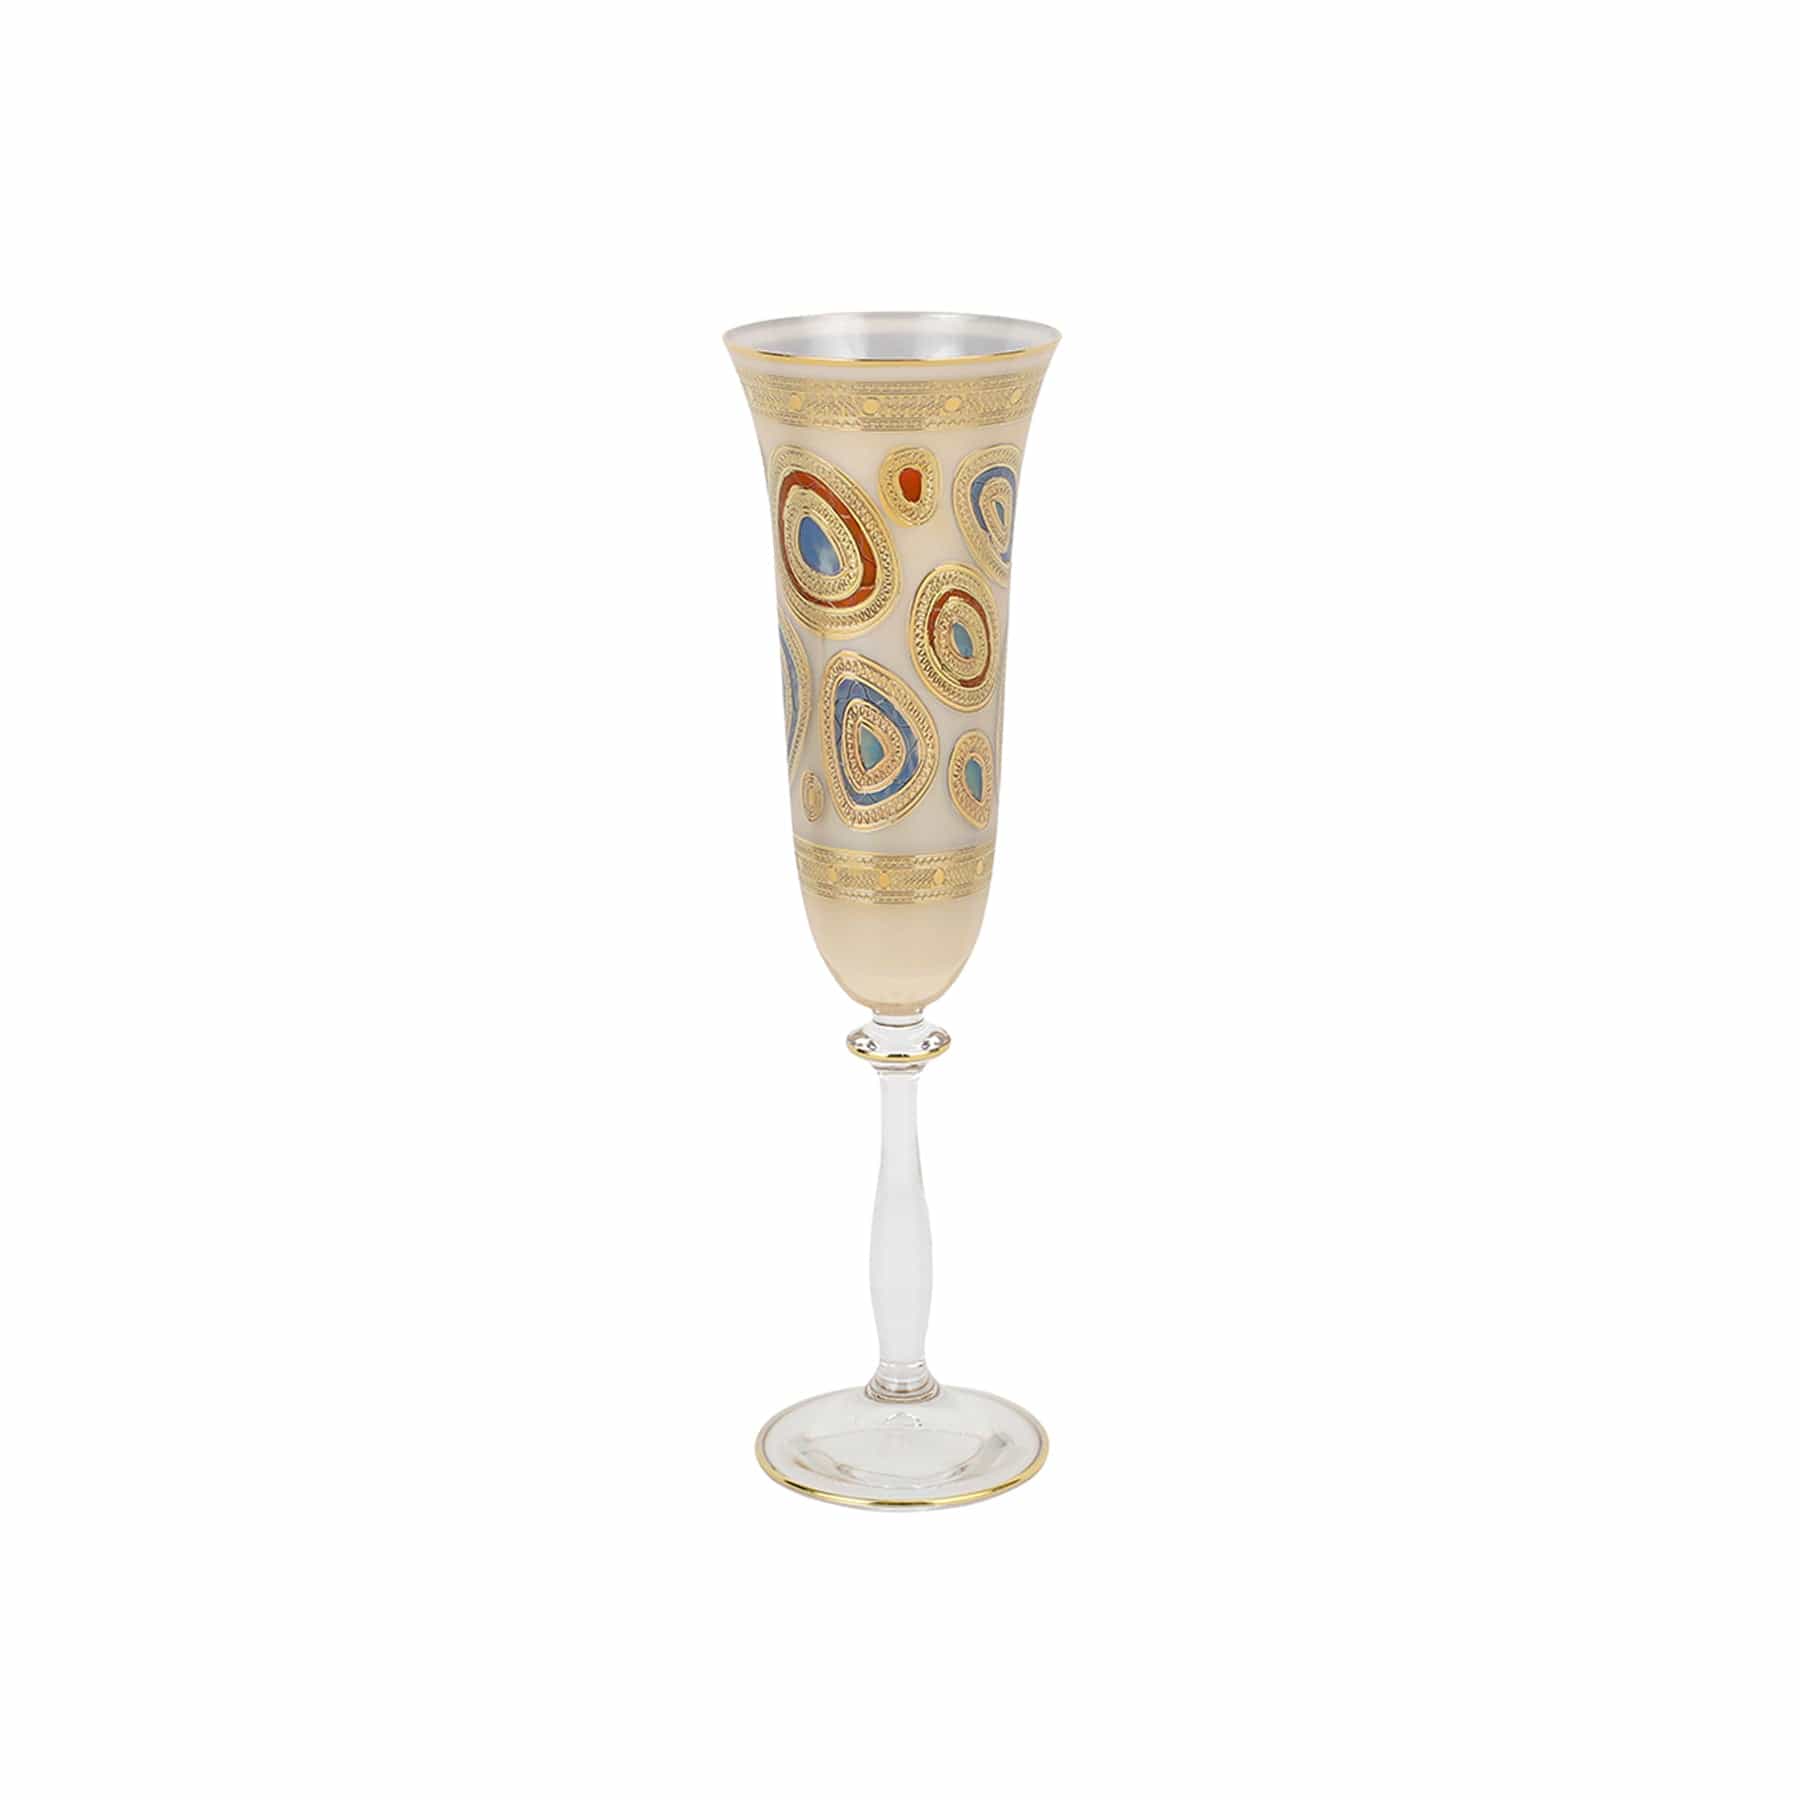 Vietri Regalia Assorted Wine Glasses - Set of 4